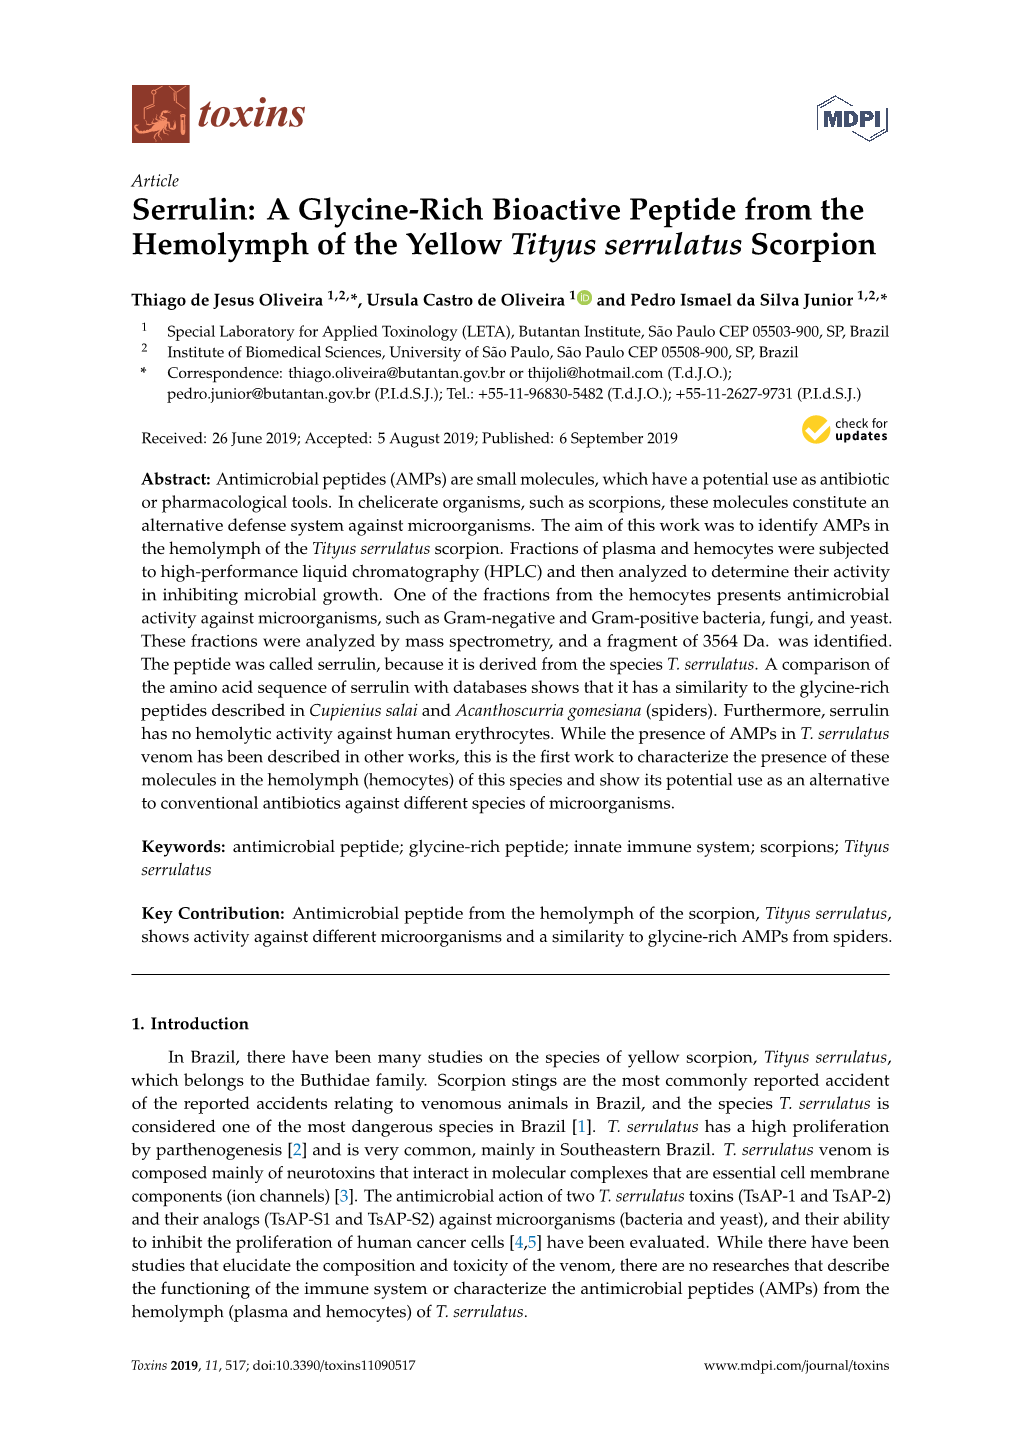 A Glycine-Rich Bioactive Peptide from the Hemolymph of the Yellow Tityus Serrulatus Scorpion